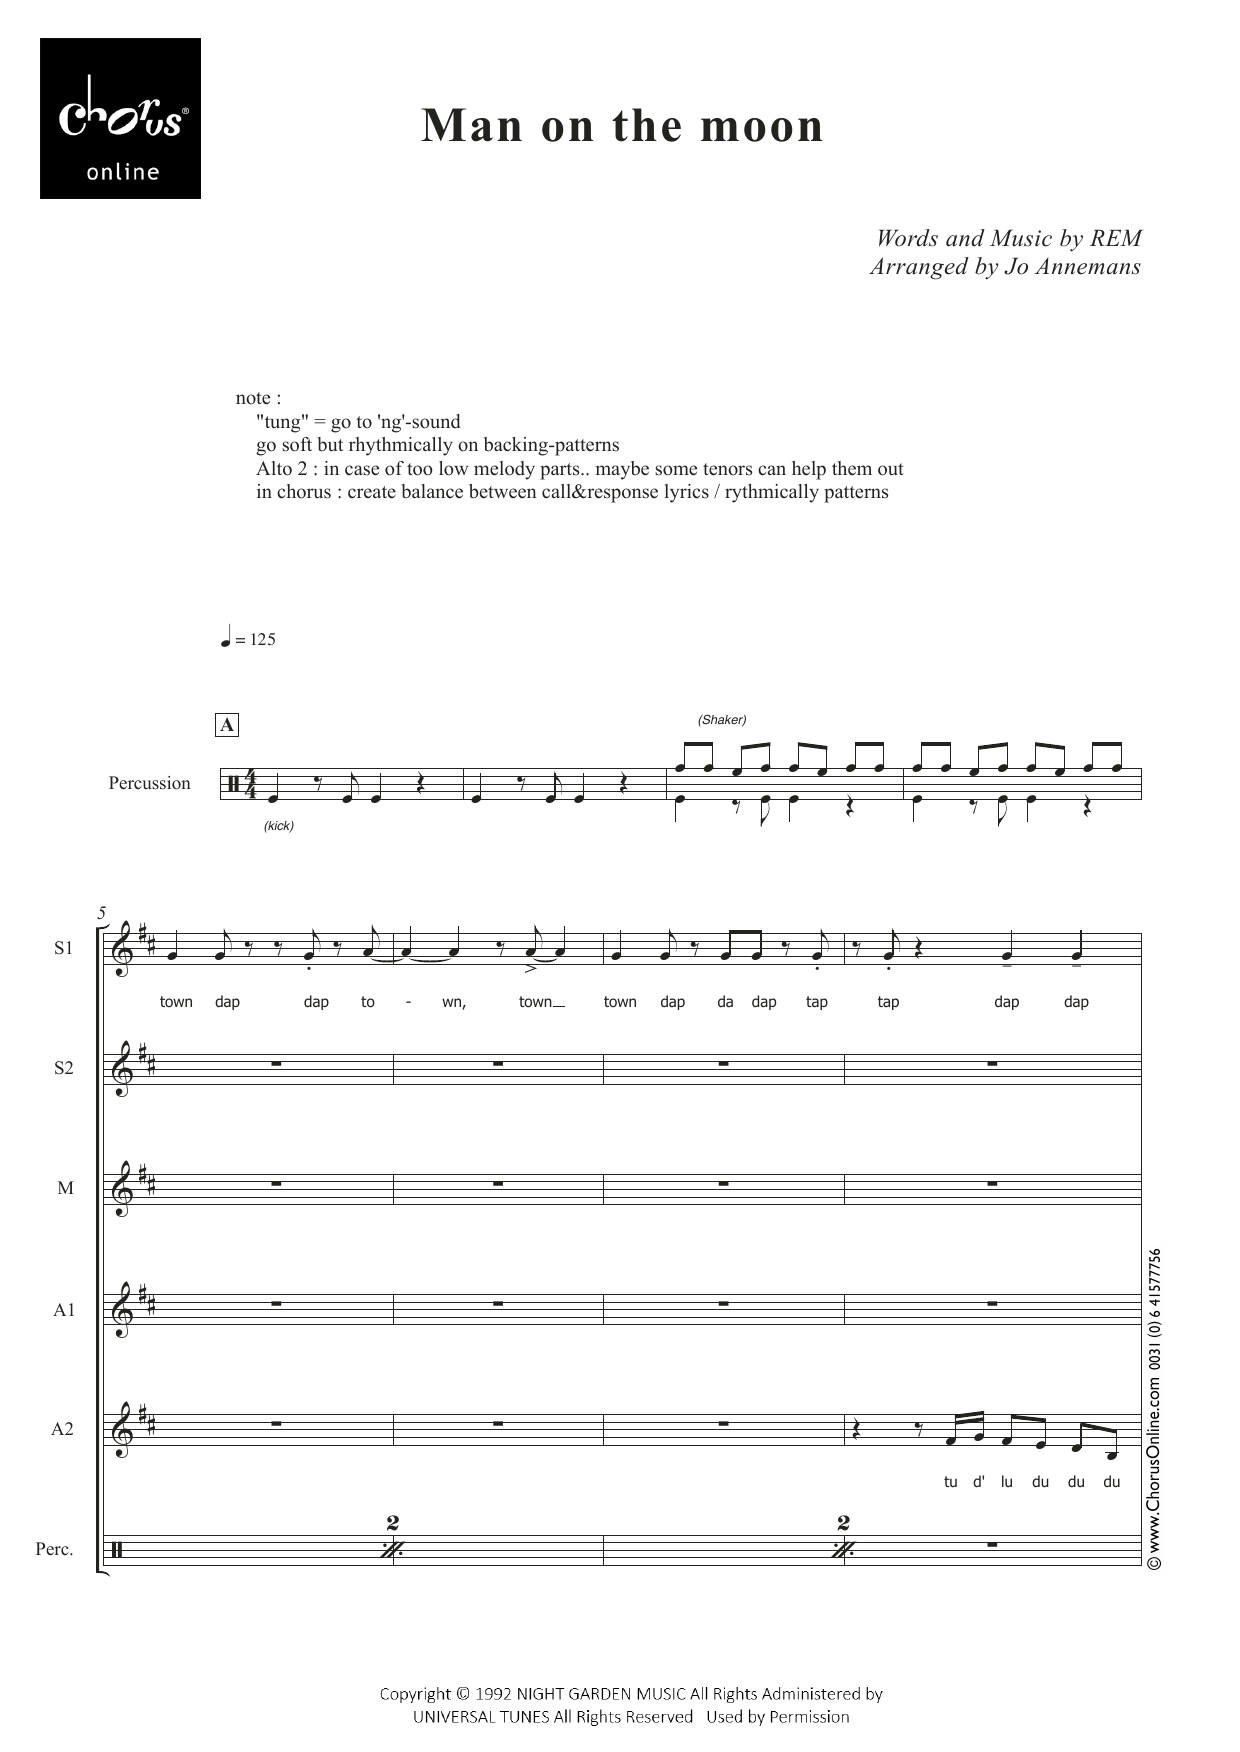 R.E.M. Man on the Moon (arr. Jo Annemans) sheet music notes printable PDF score